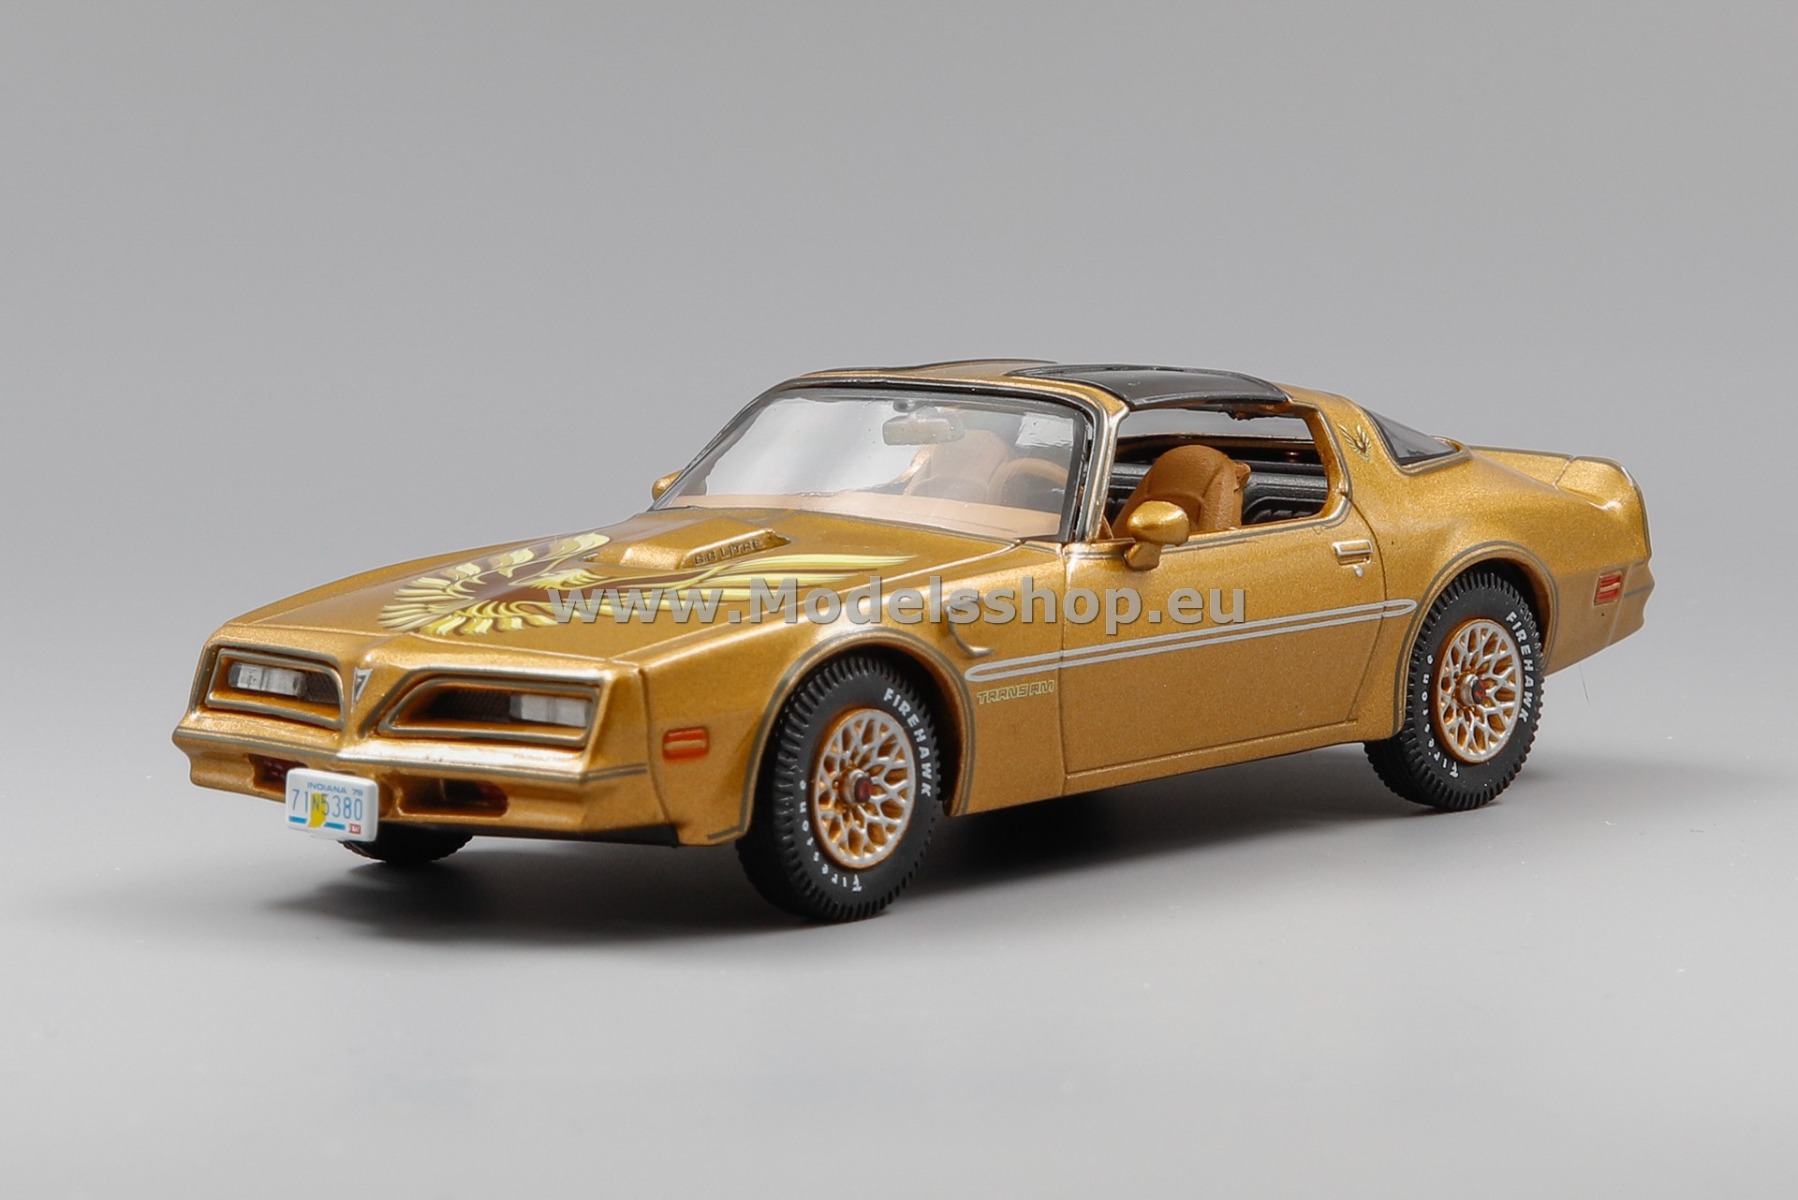 IXOCLC412N Pontiac Firebird Trans Am, 1978 /gold metallic - decorated/